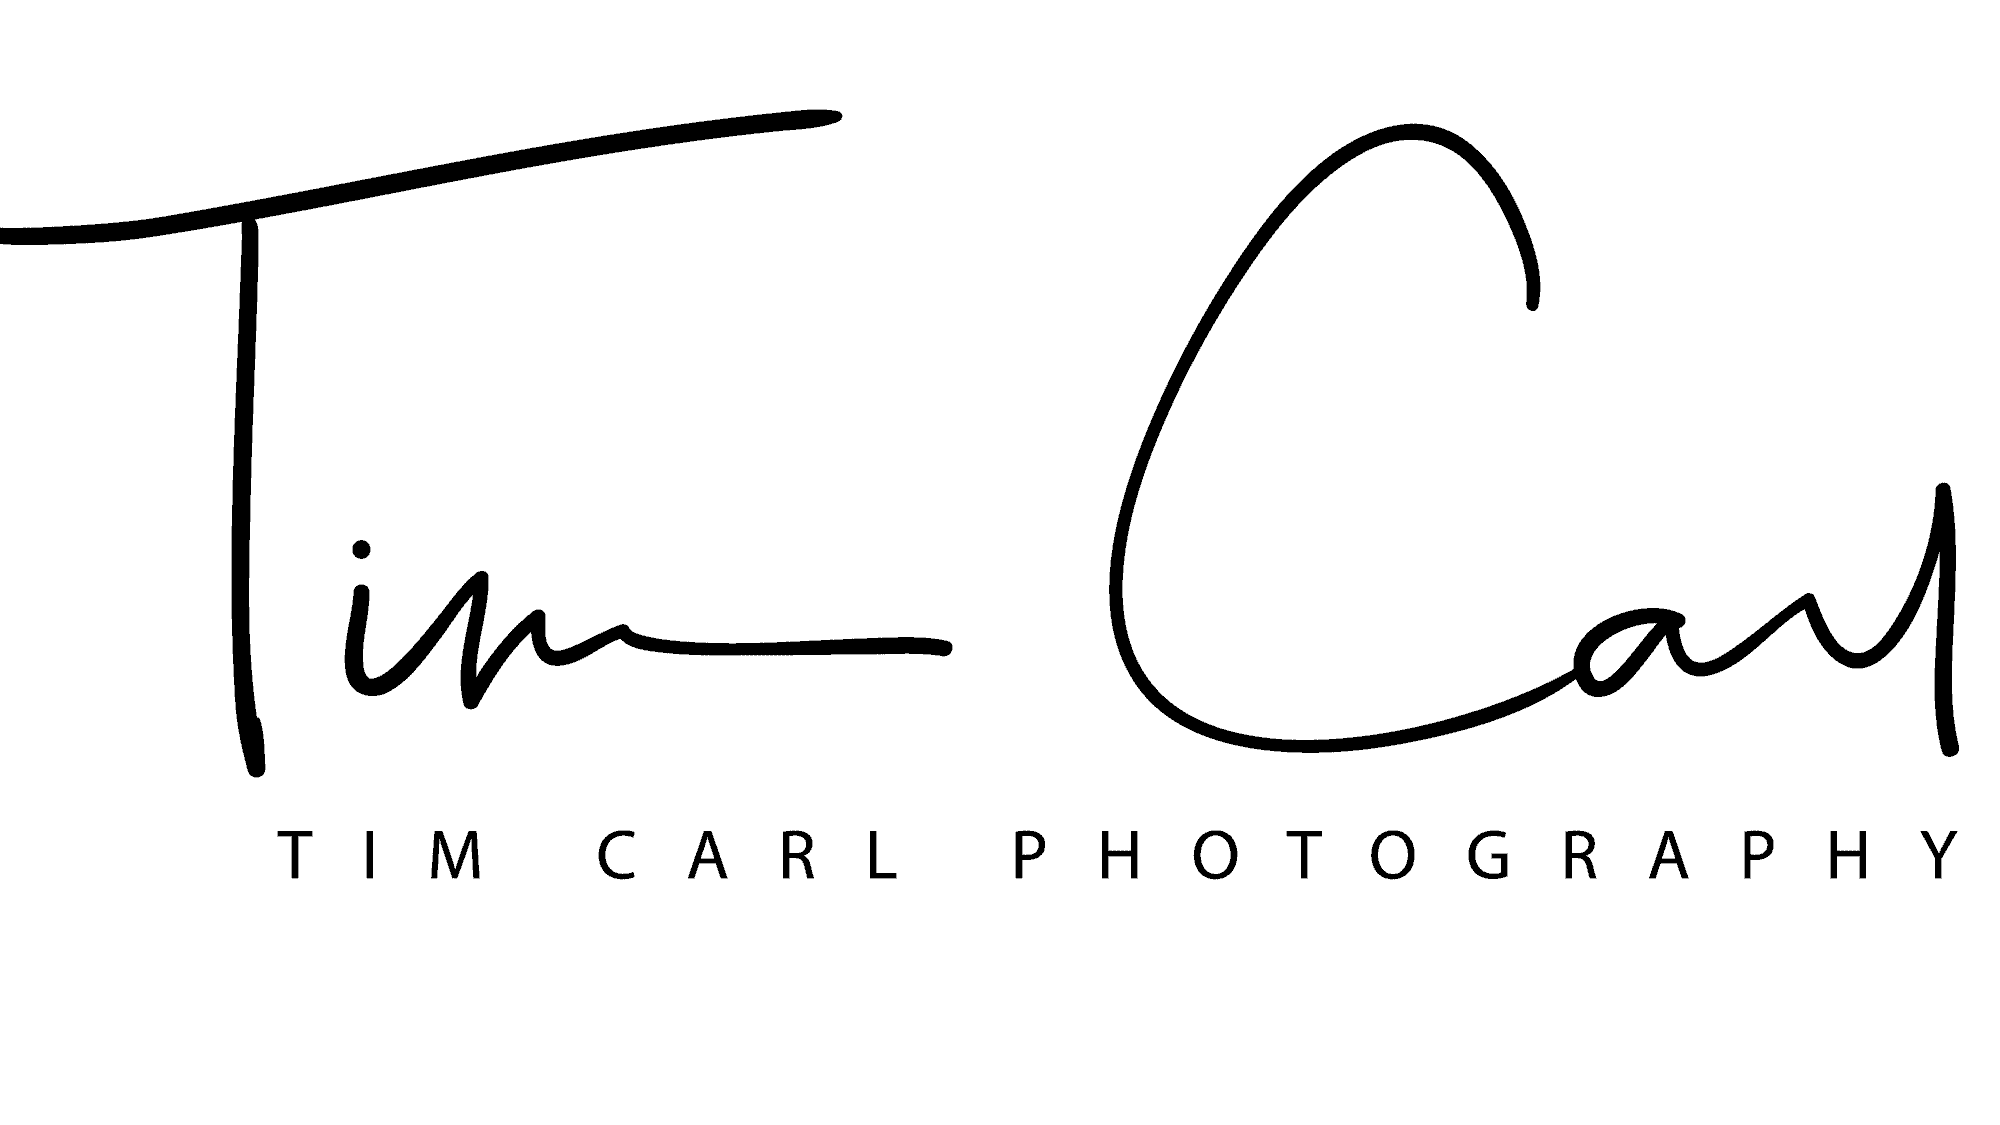 Tim Carl Photography